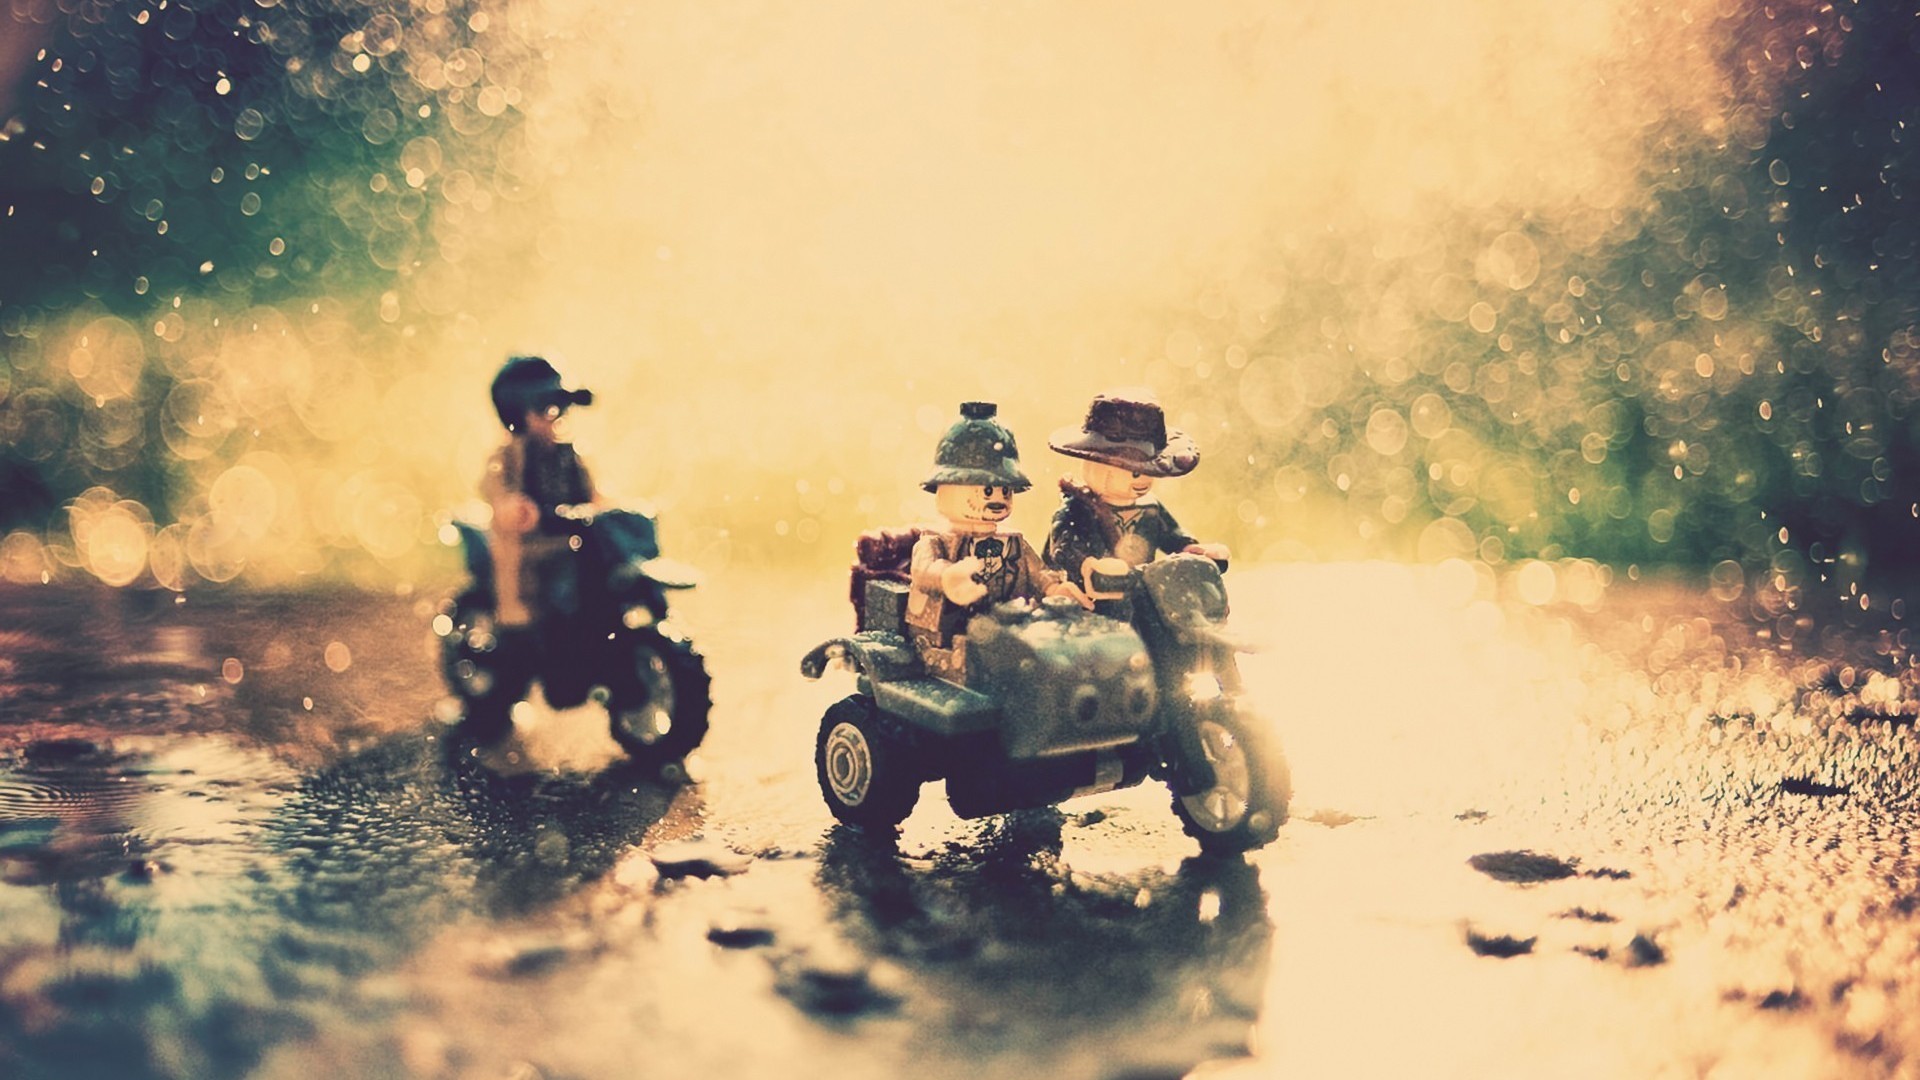 General 1920x1080 LEGO Indiana Jones motorcycle water figurines vehicle toys